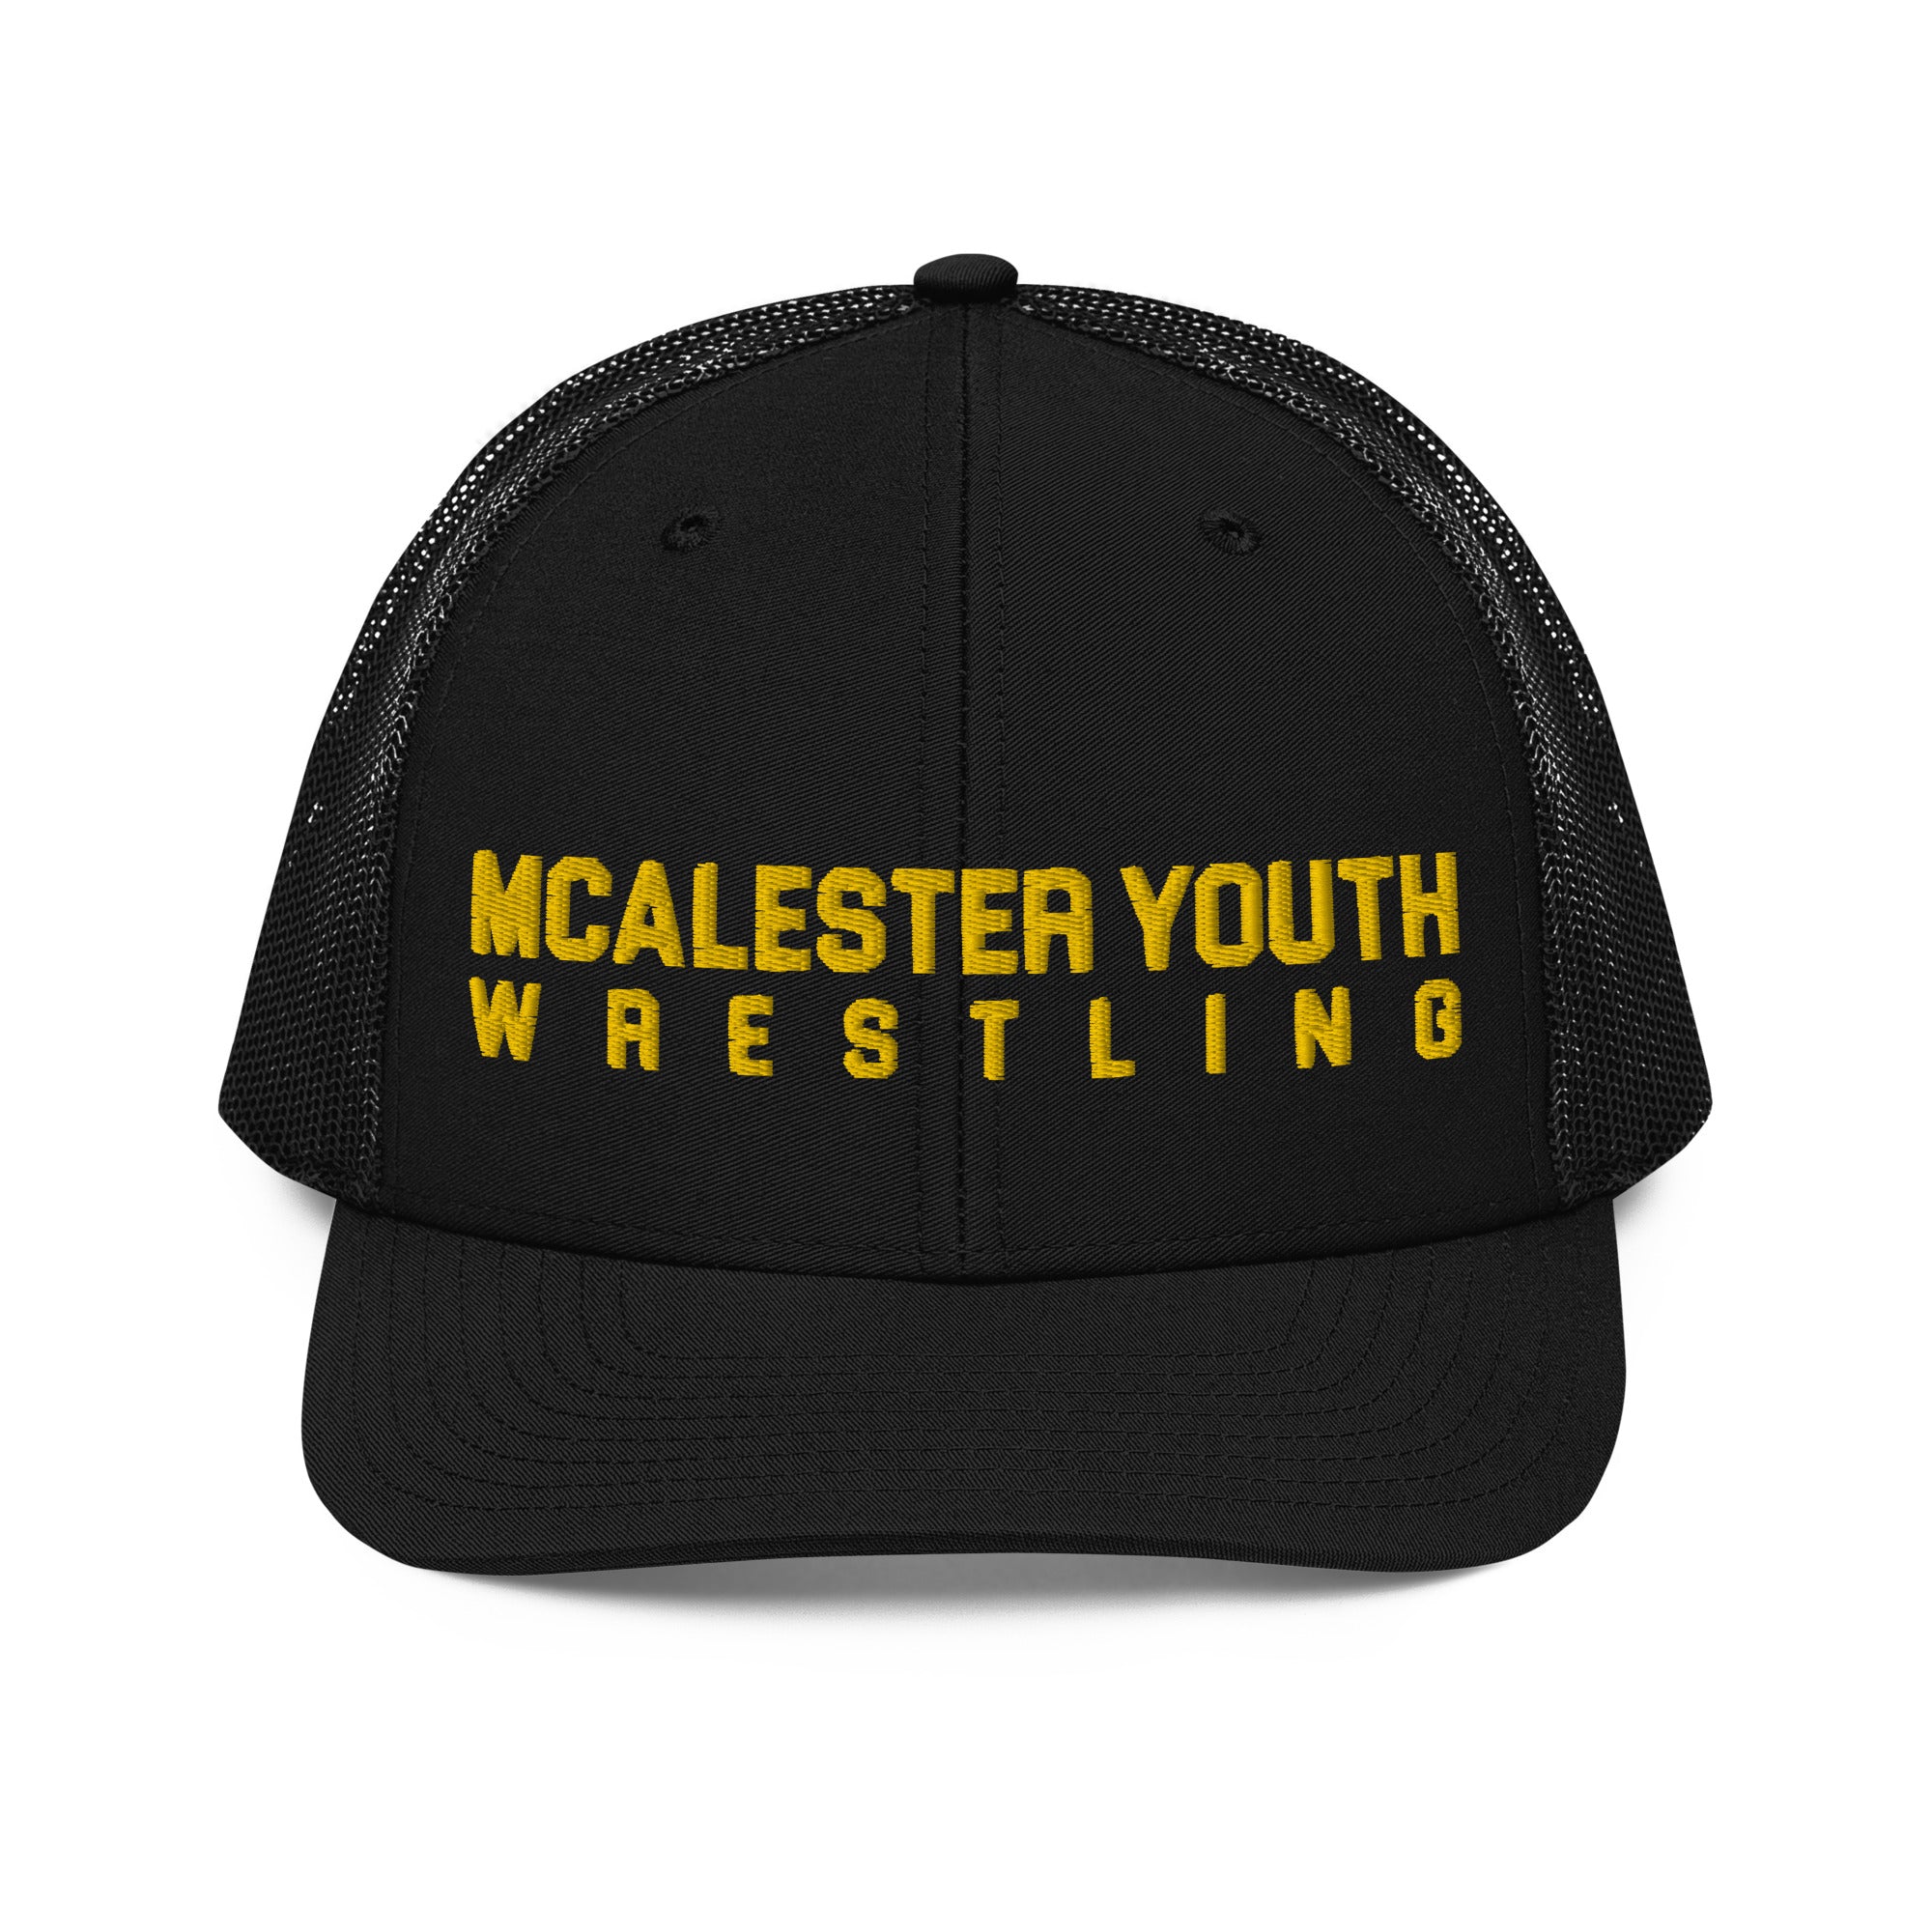 McAlester Youth Wrestling Snapback Trucker Cap